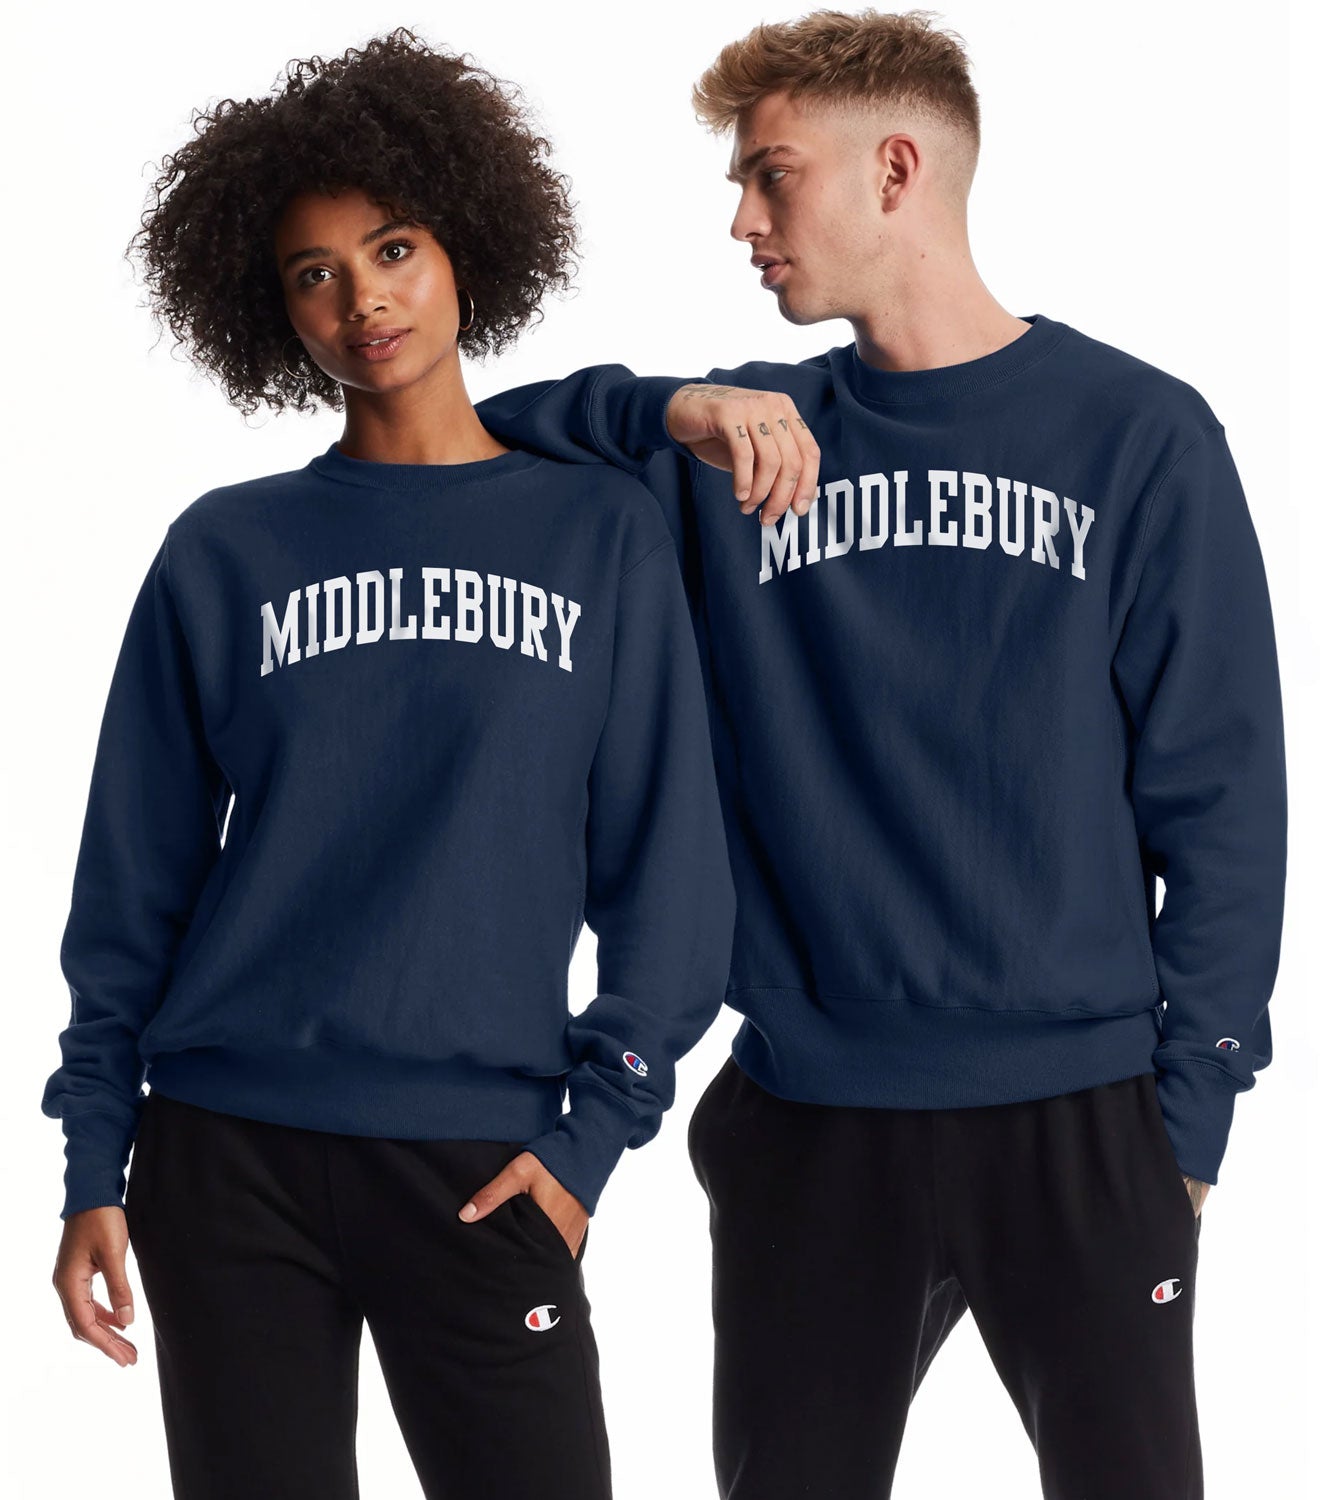 Middlebury Reverse Weave Crew Neck Sweatshirt (Navy)